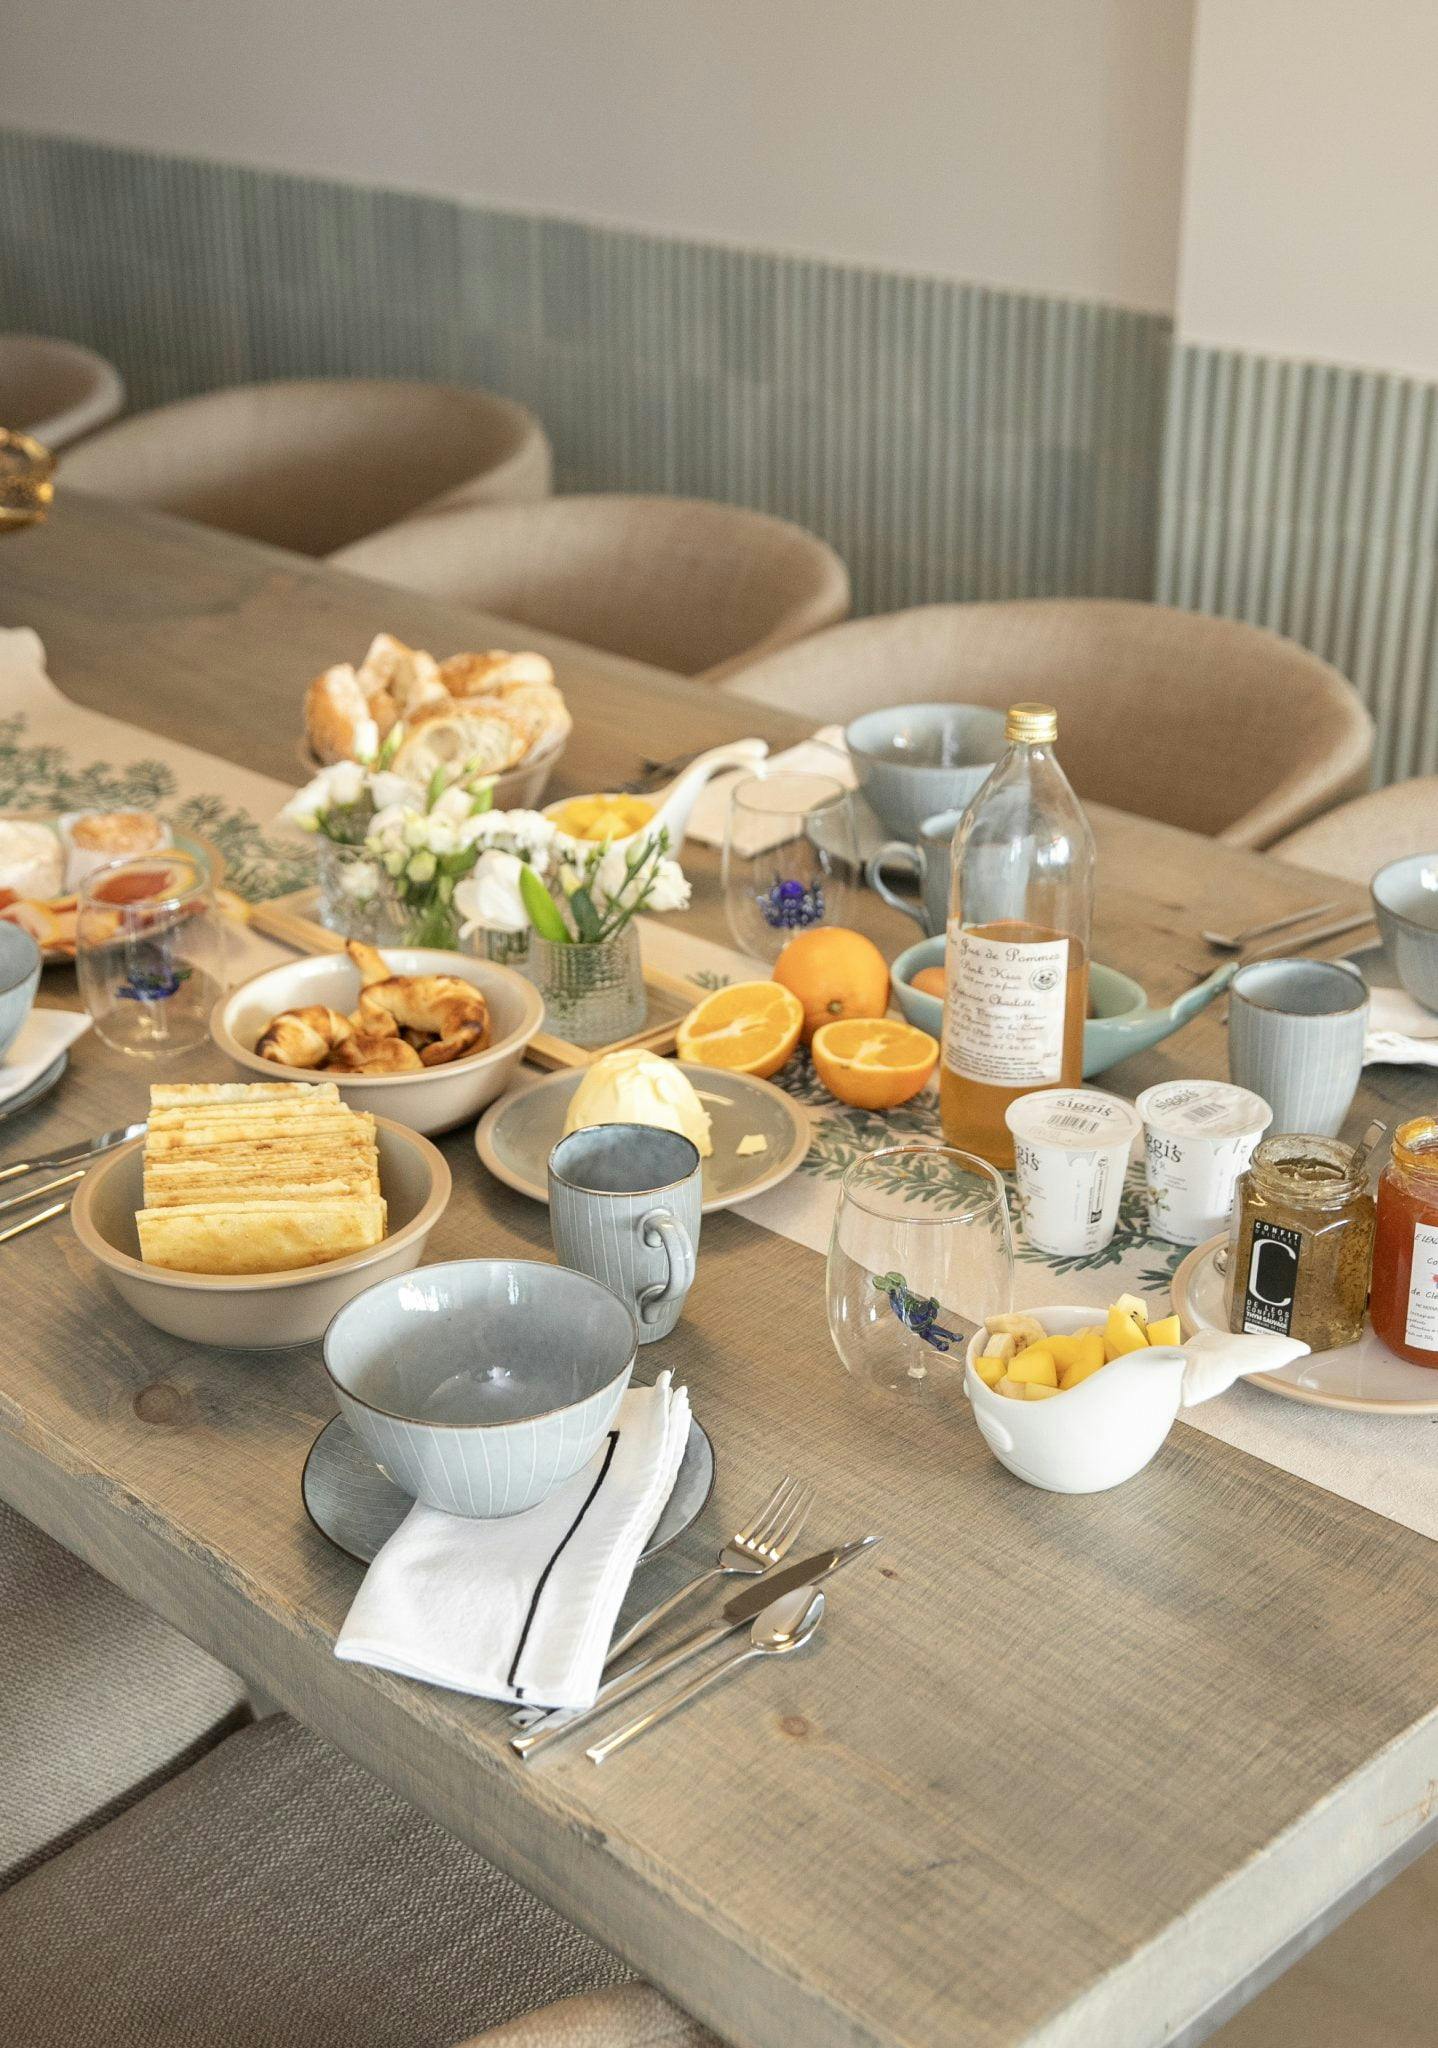 Well-stocked breakfast table